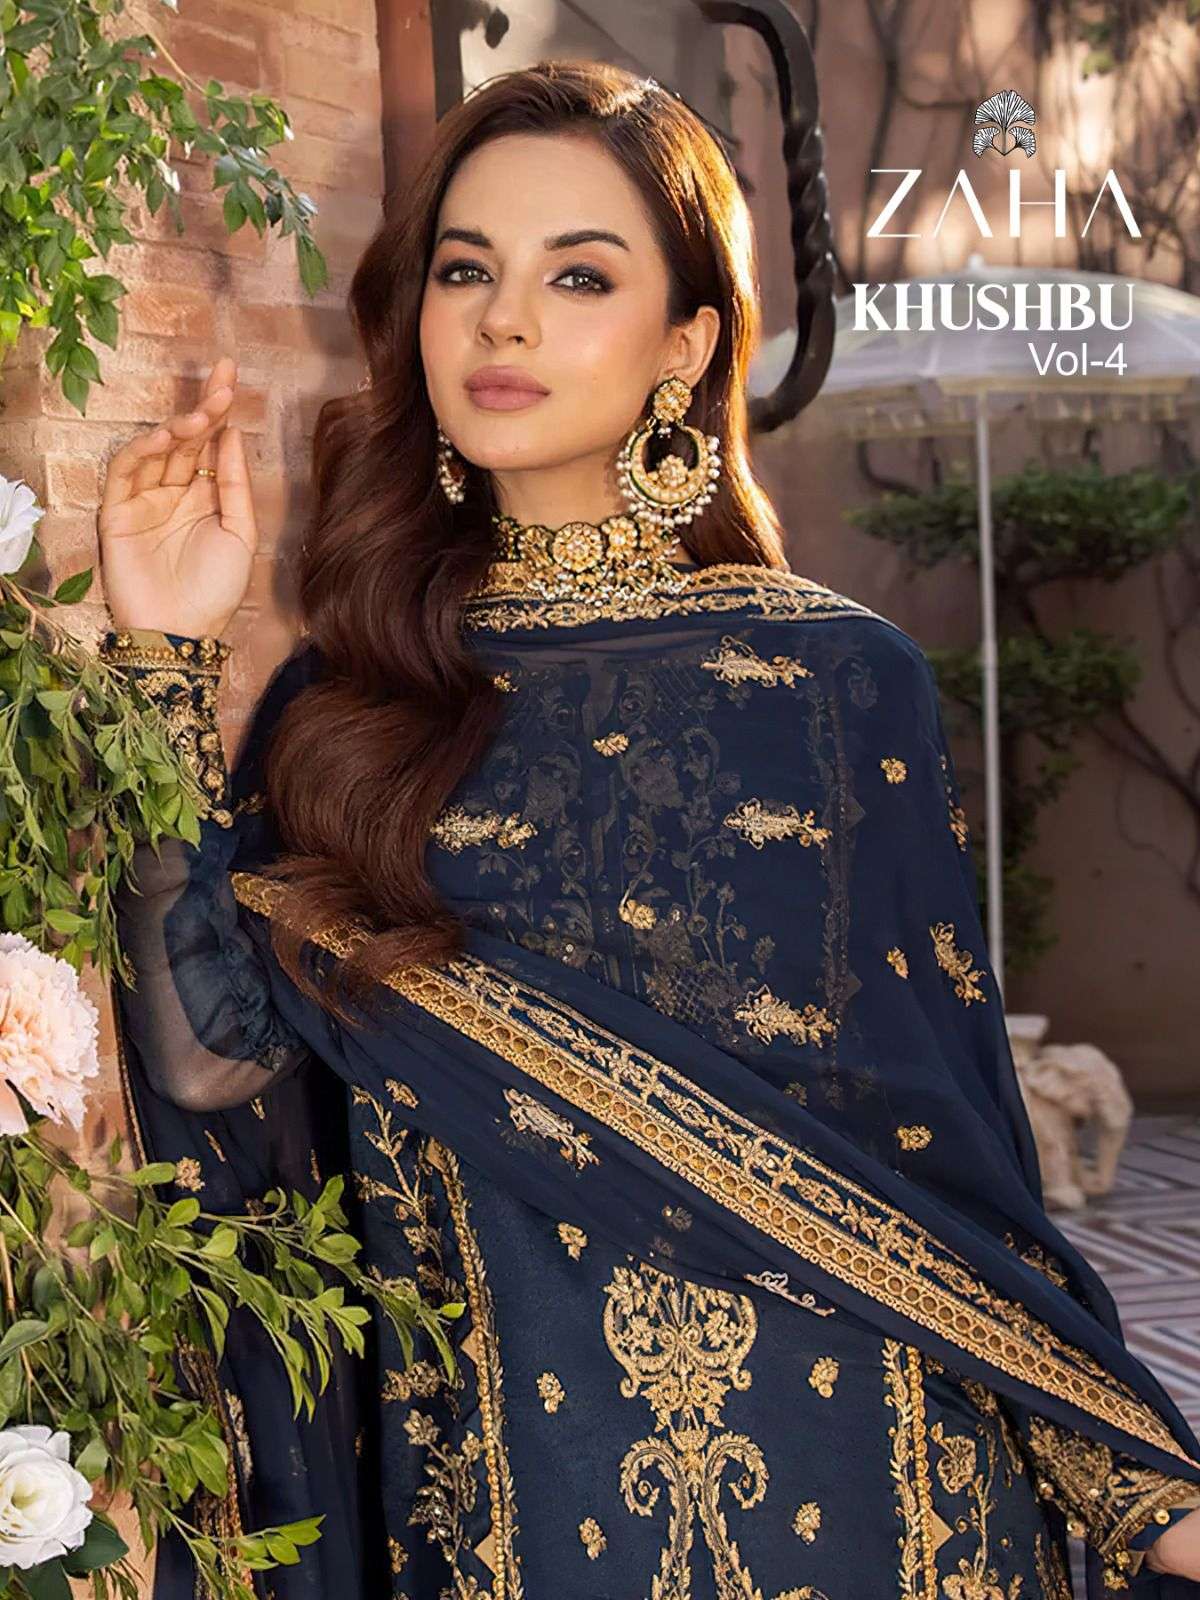 khushbu vol 4 by zaha designer pakistani suit